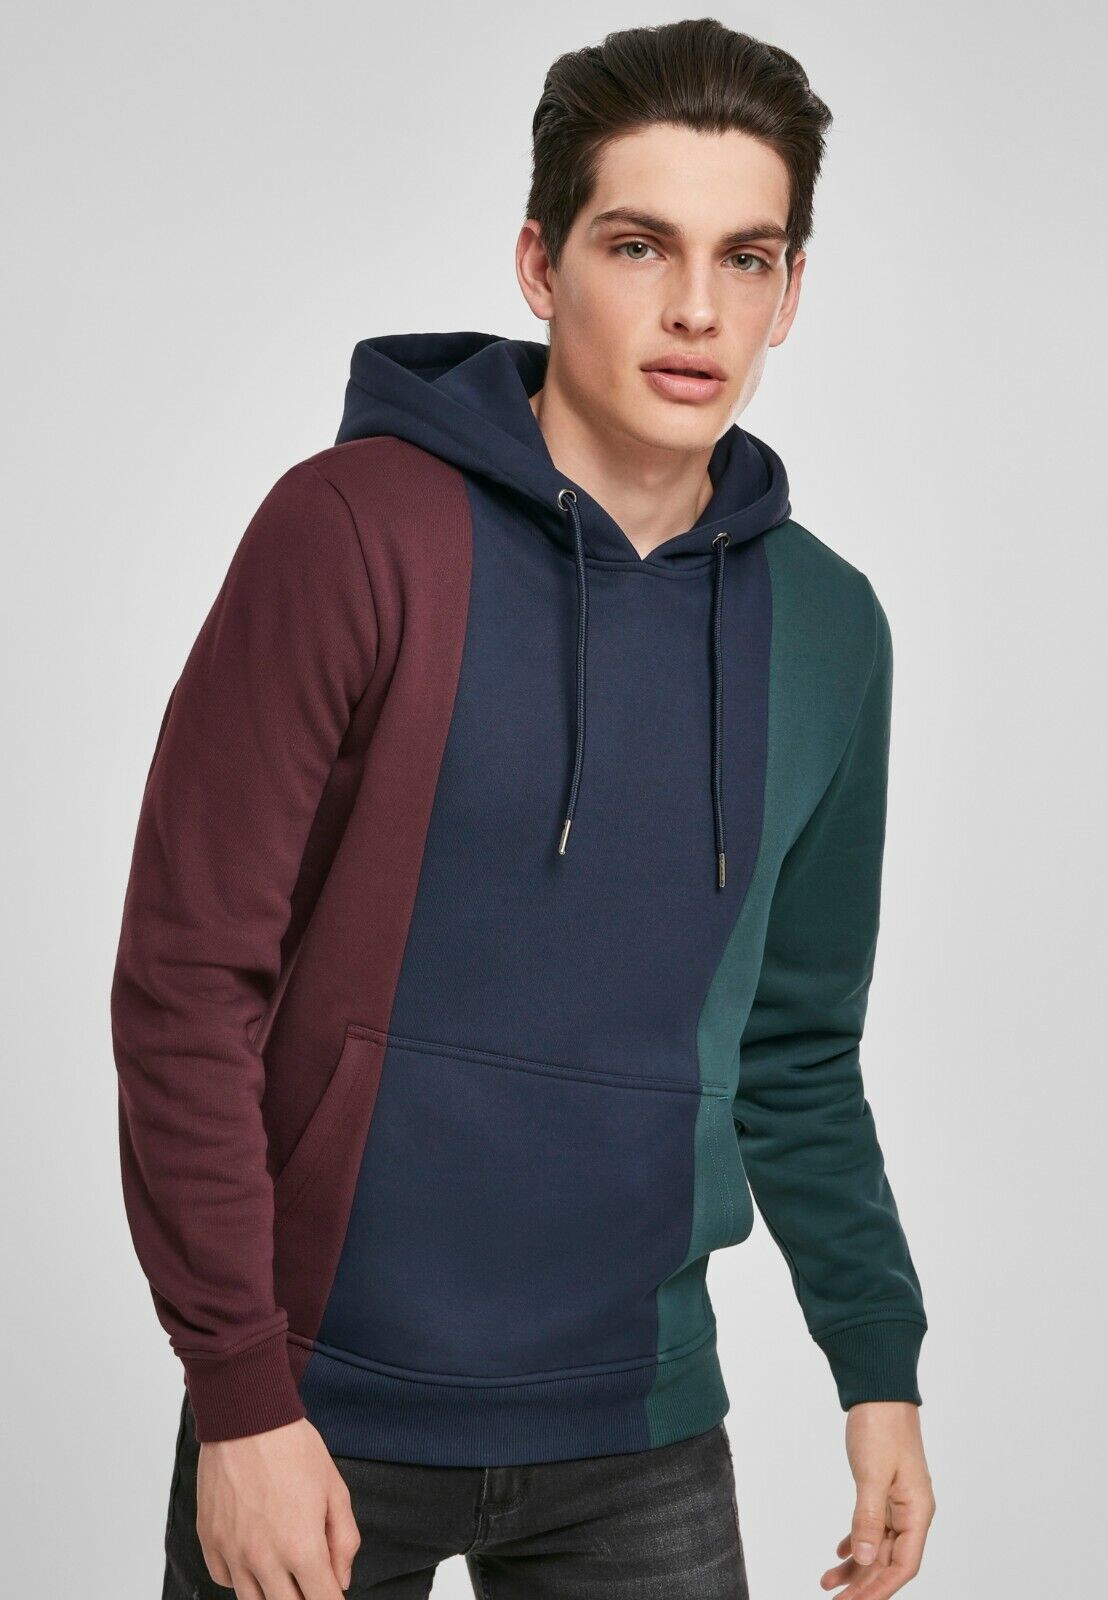 Urban Classics Jersey Men's Sweatshirt with Hood Tripple Over Sizes | eBay